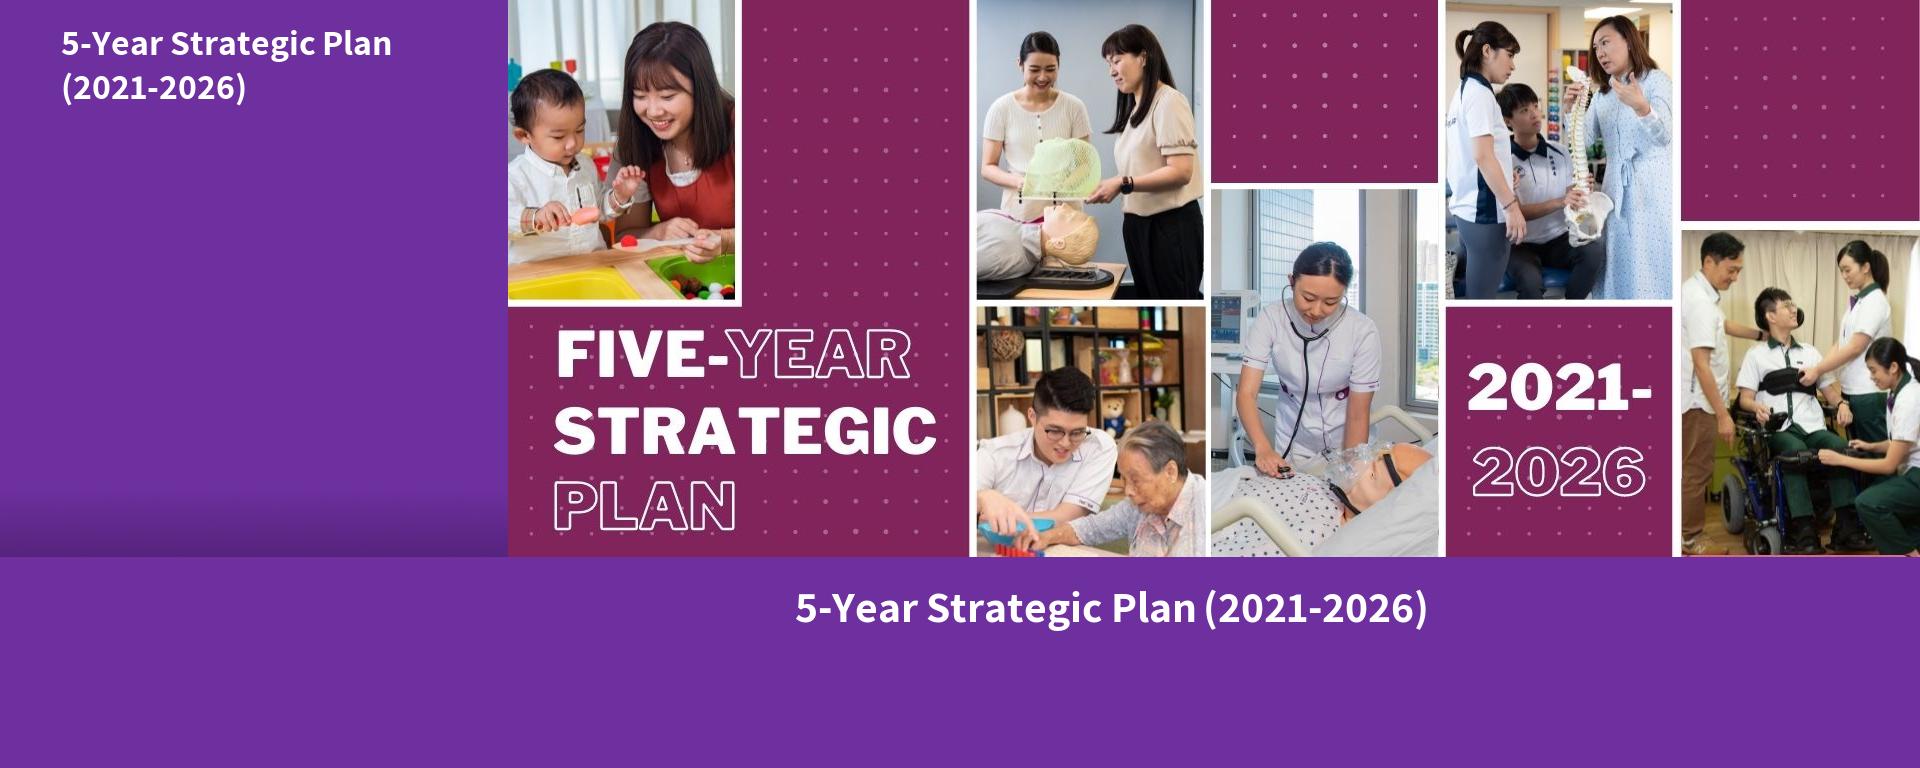 5-Year Strategic Plan (2021-2026)